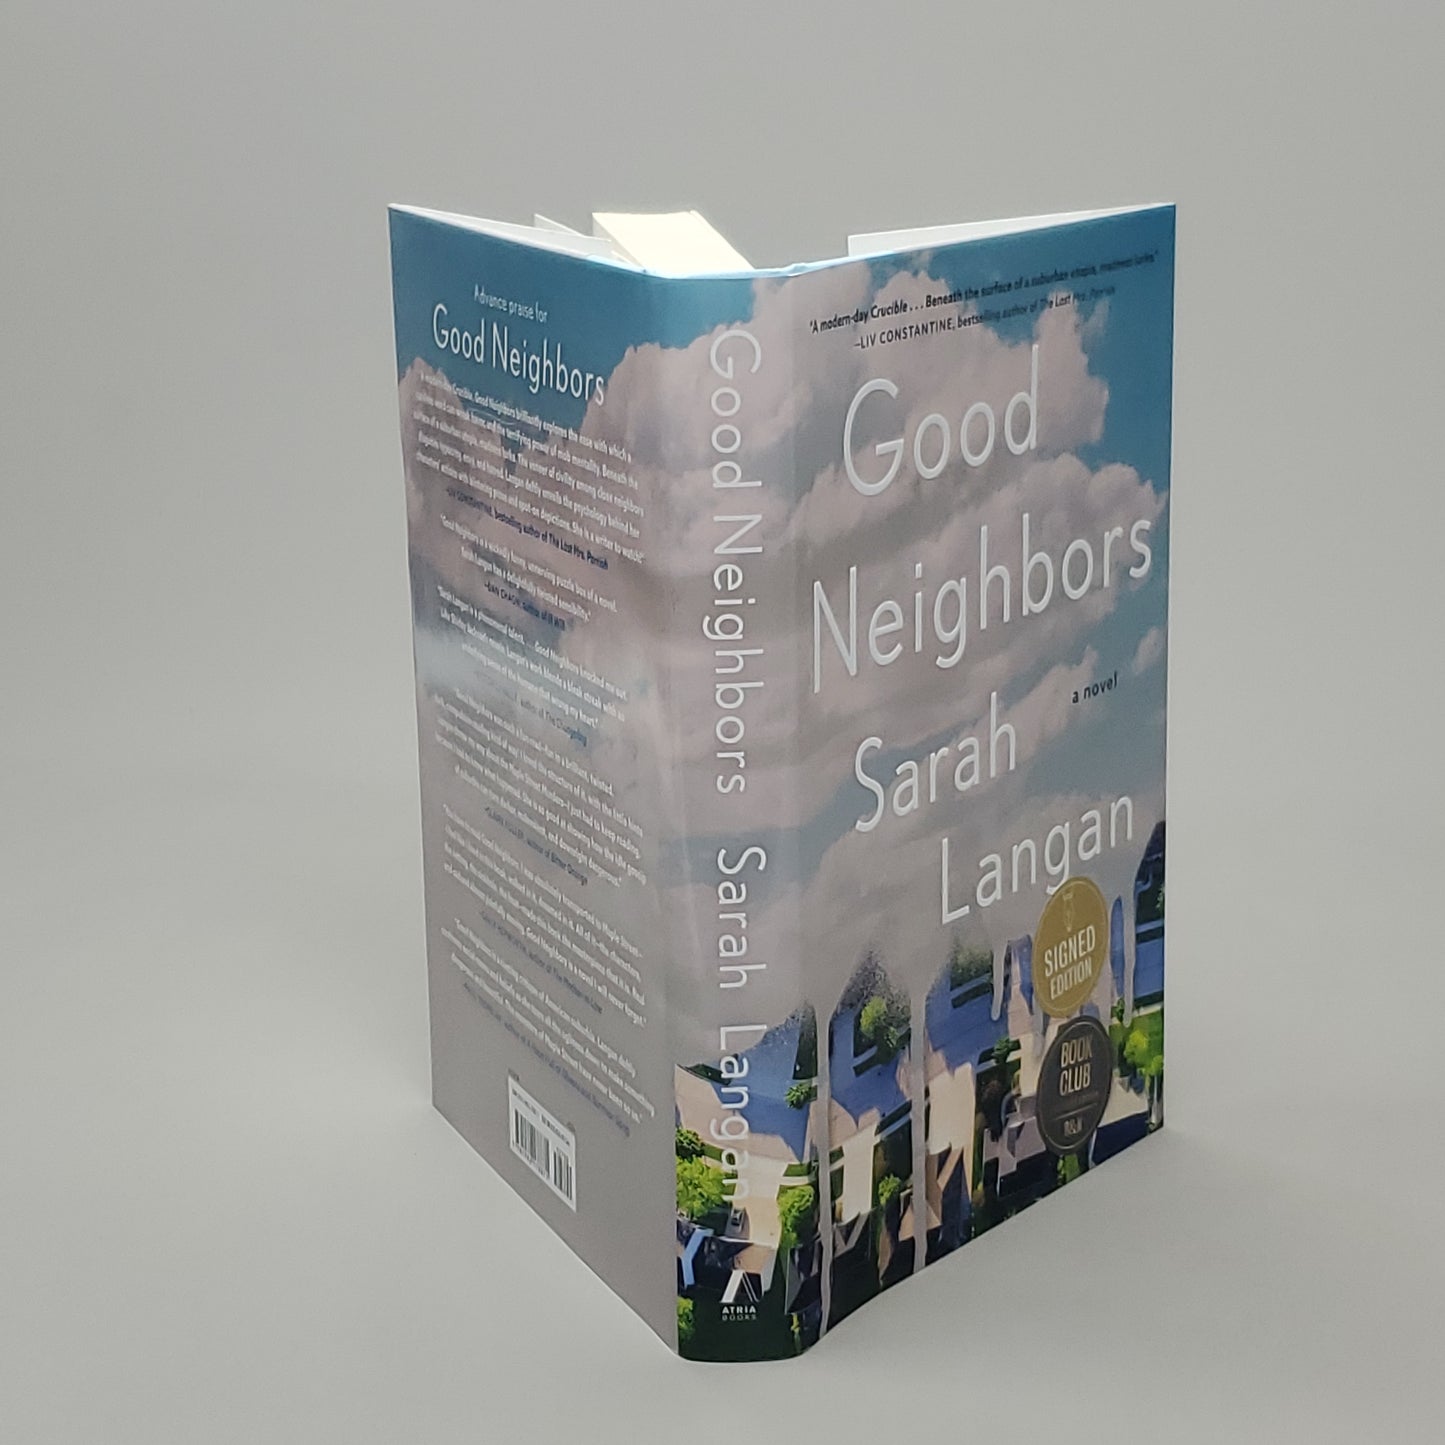 GOOD NEIGHBORS by Sarah Langan Signed Book Club Edition Book Hardback (New)